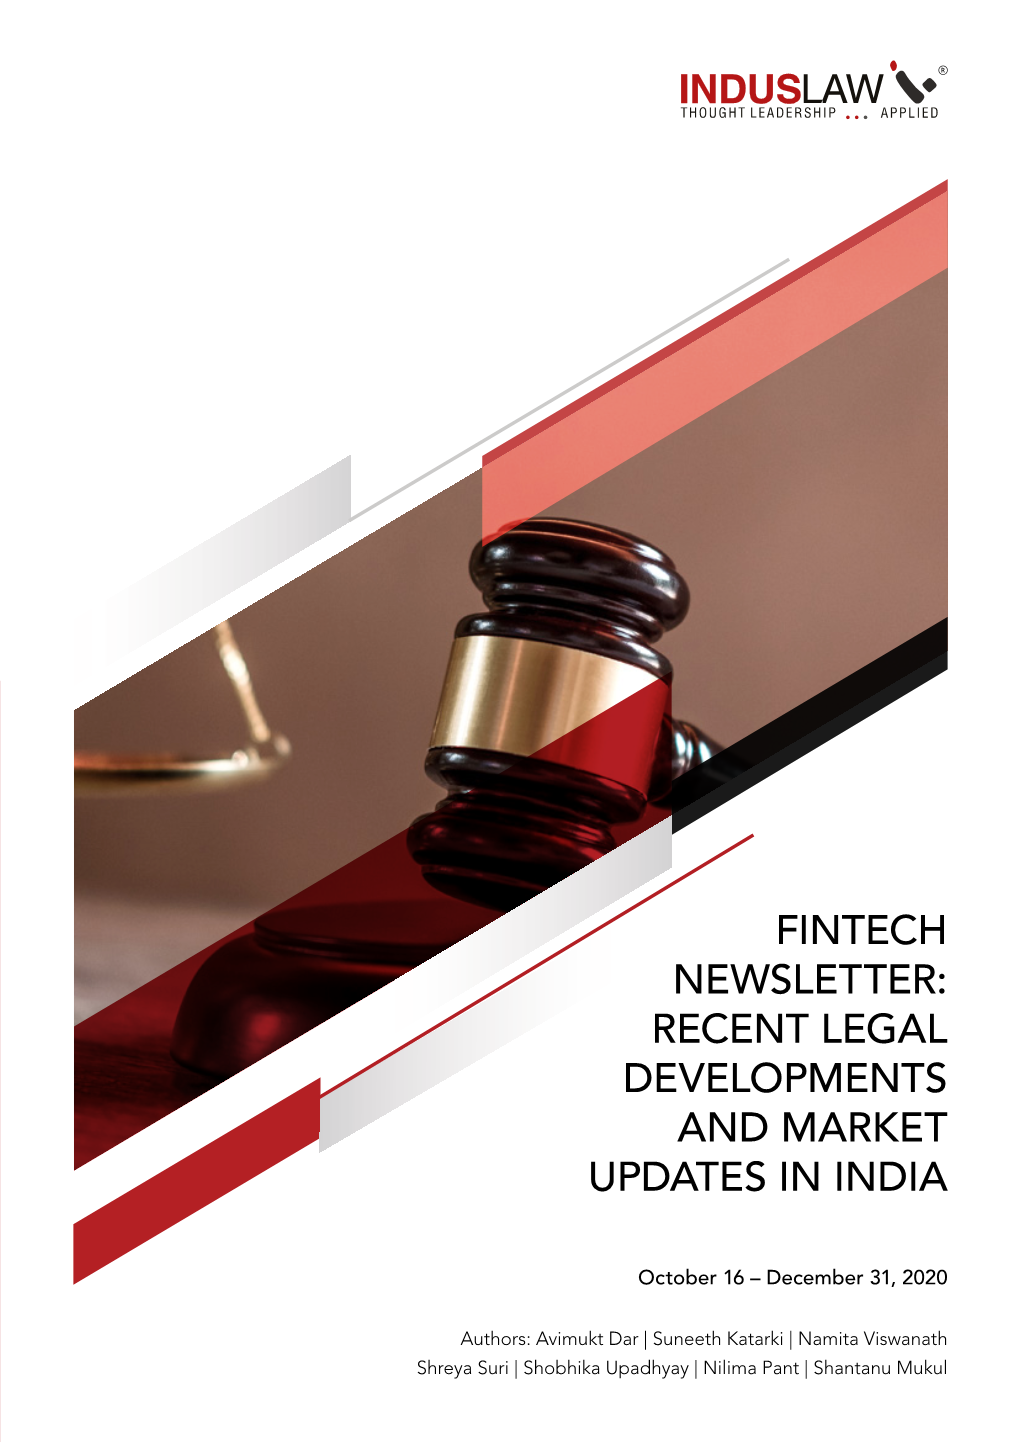 Fintech Newsletter: Recent Legal Developments and Market Updates in India